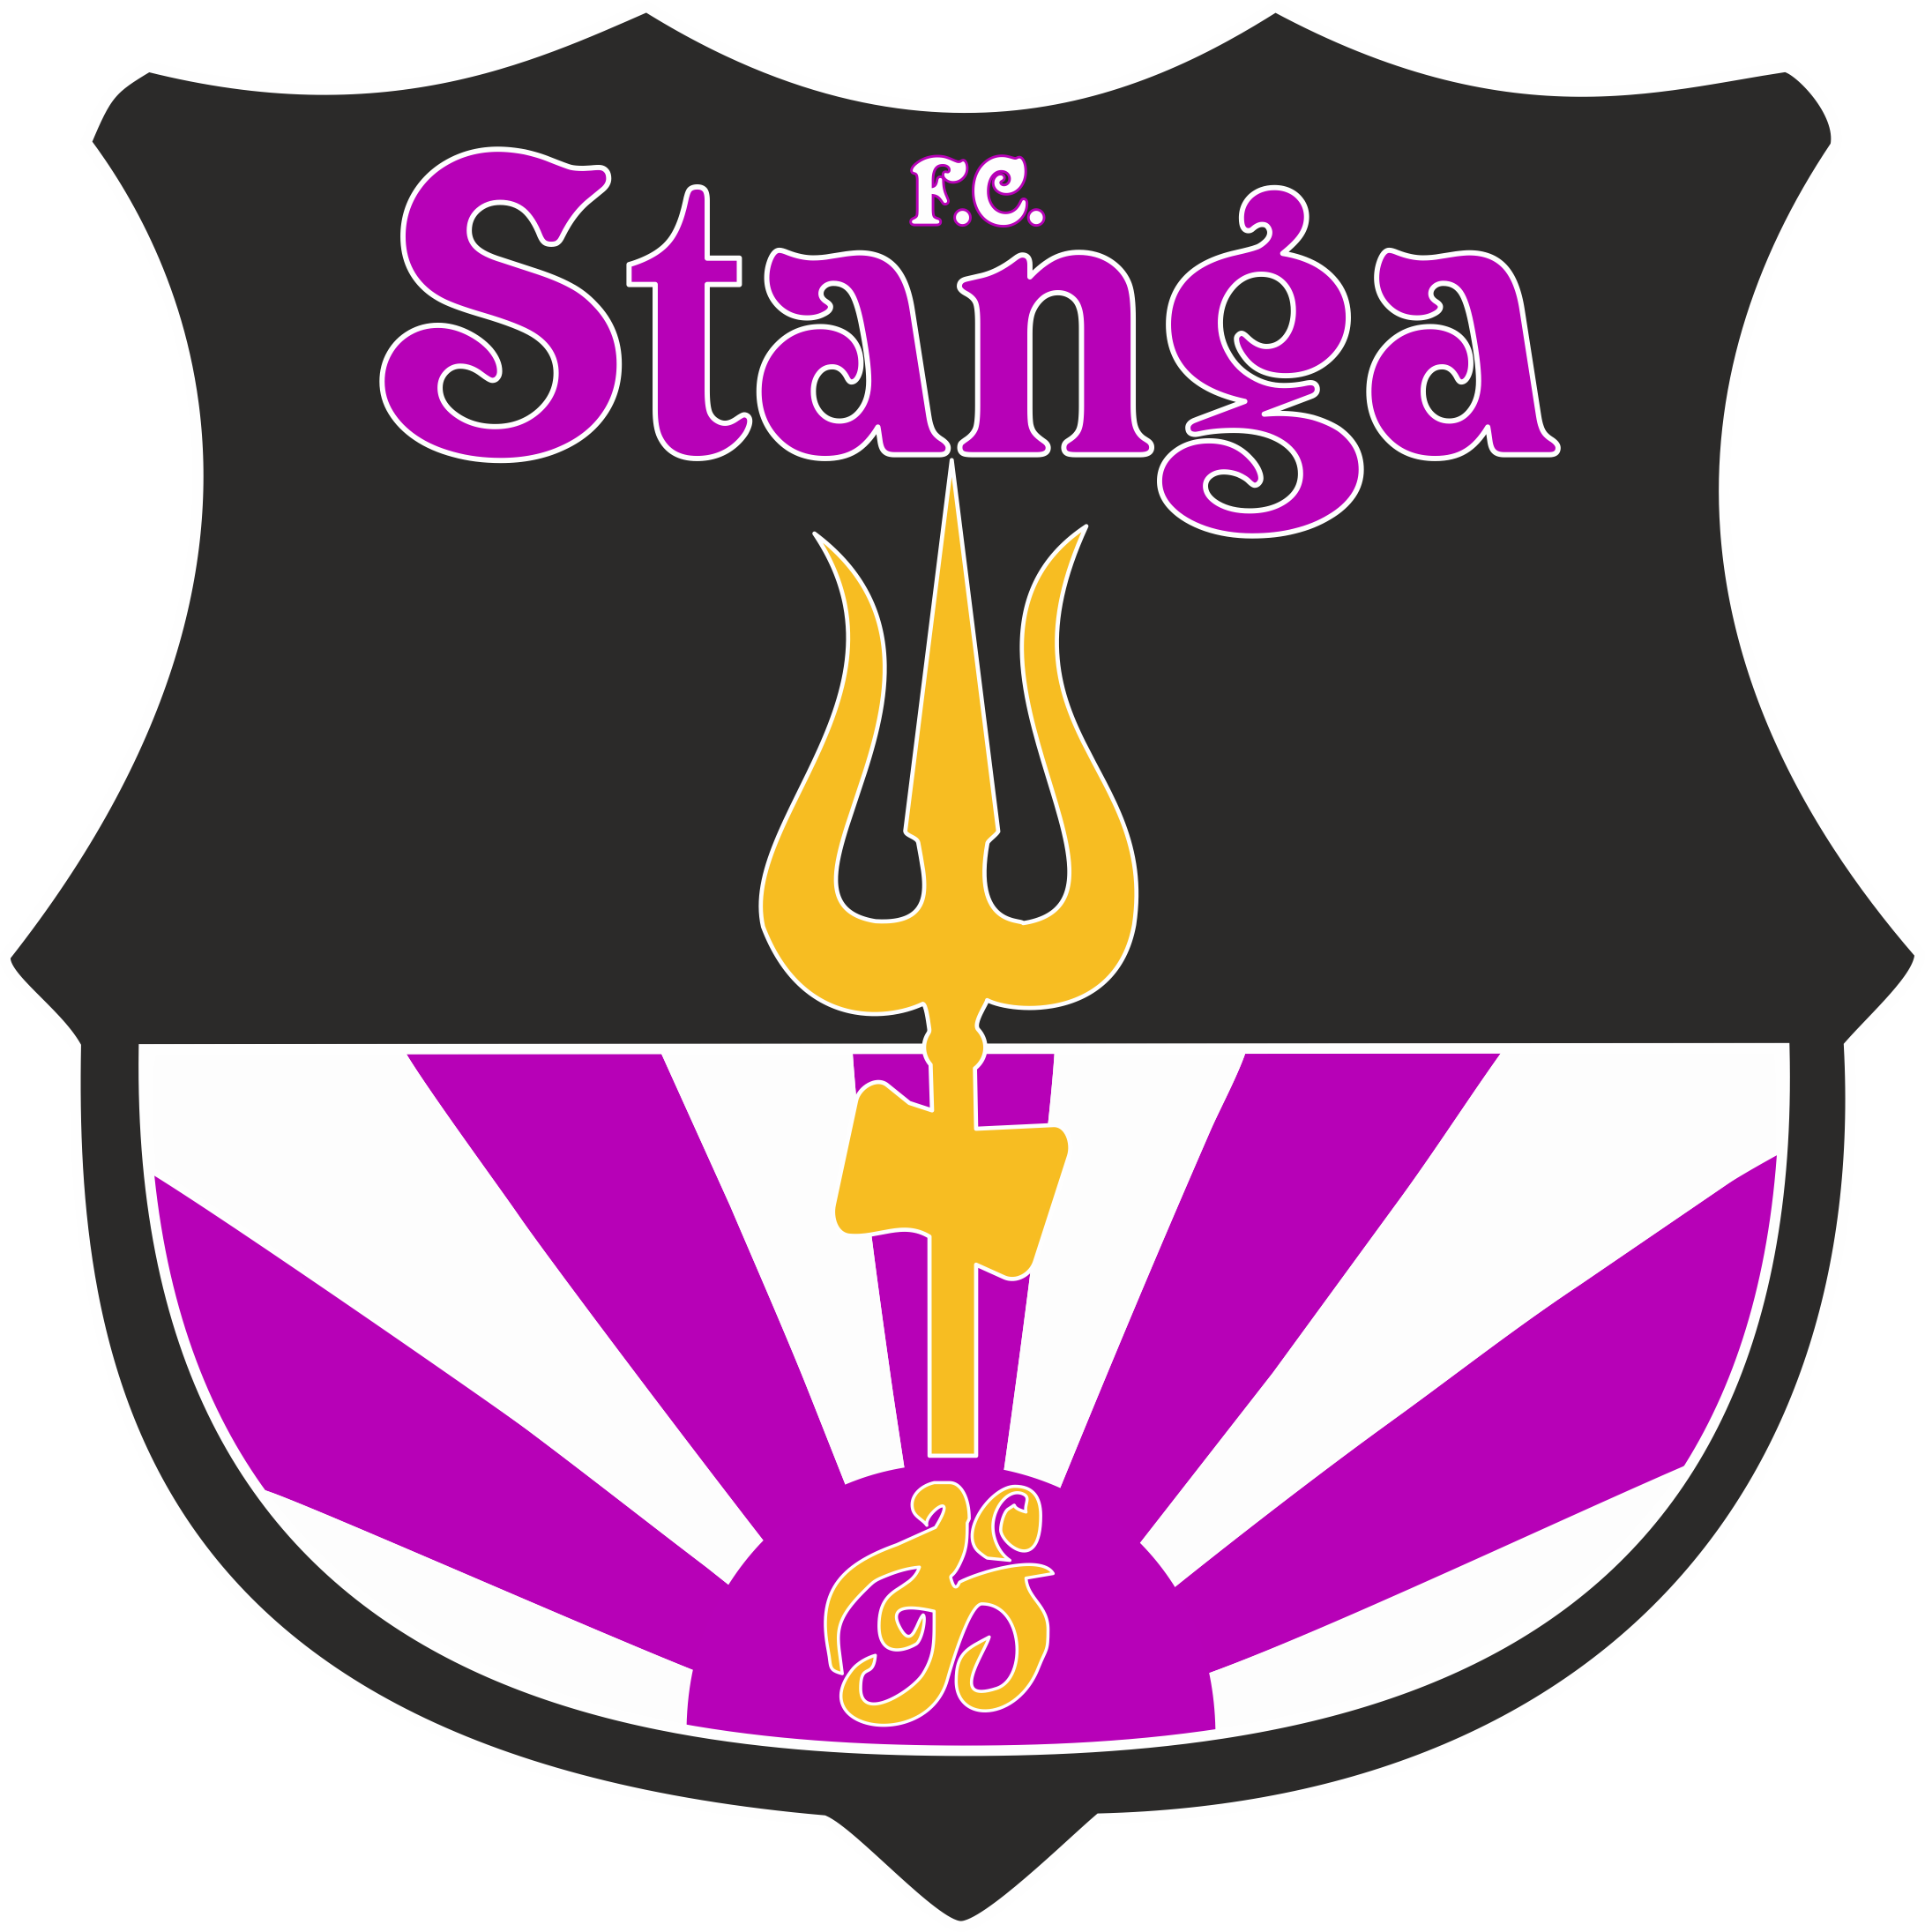 FC STANGA